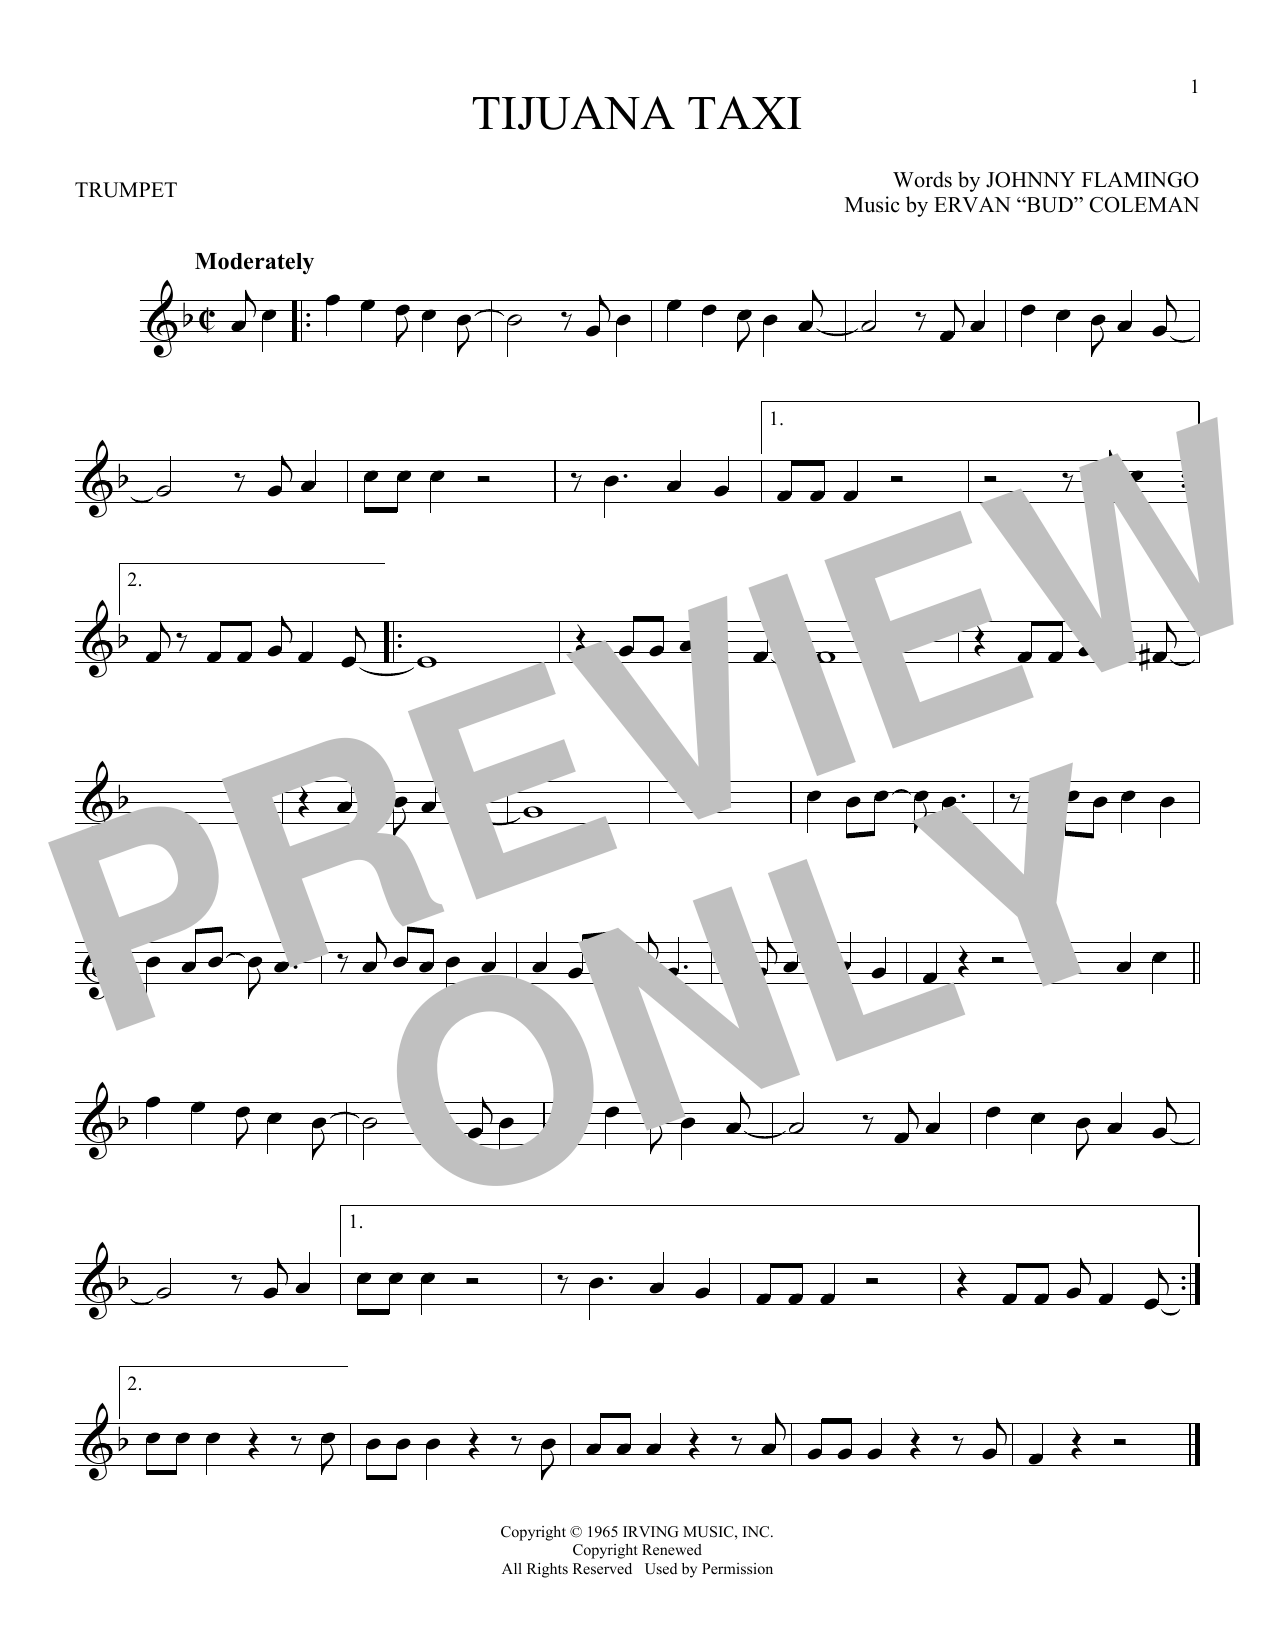 Download Herb Alpert & The Tijuana Brass Band Tijuana Taxi Sheet Music